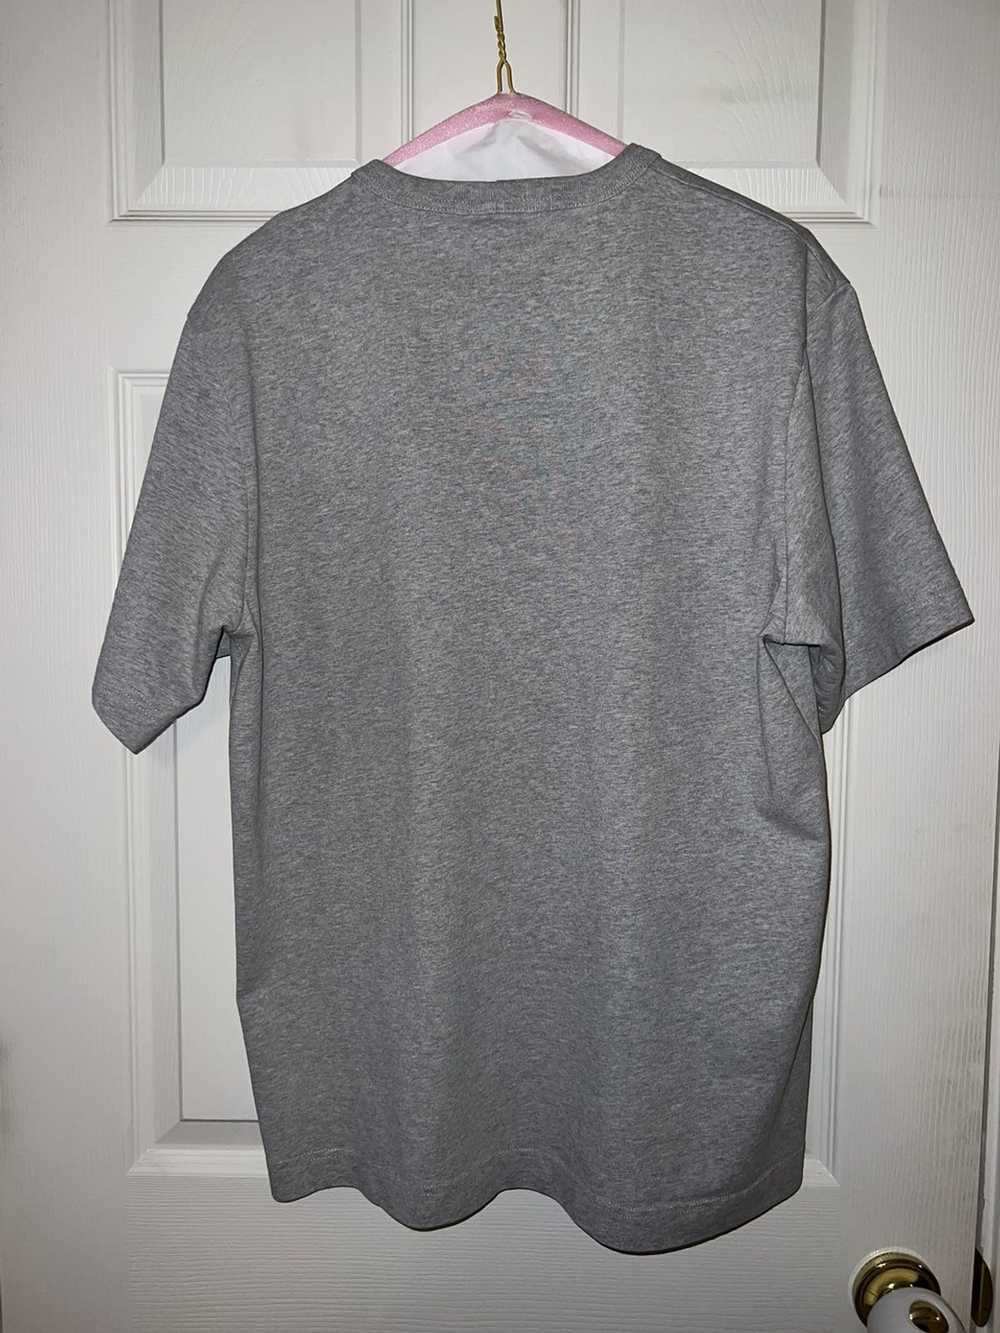 Helmut Lang Helmut Lang Grey T-Shirt - image 2